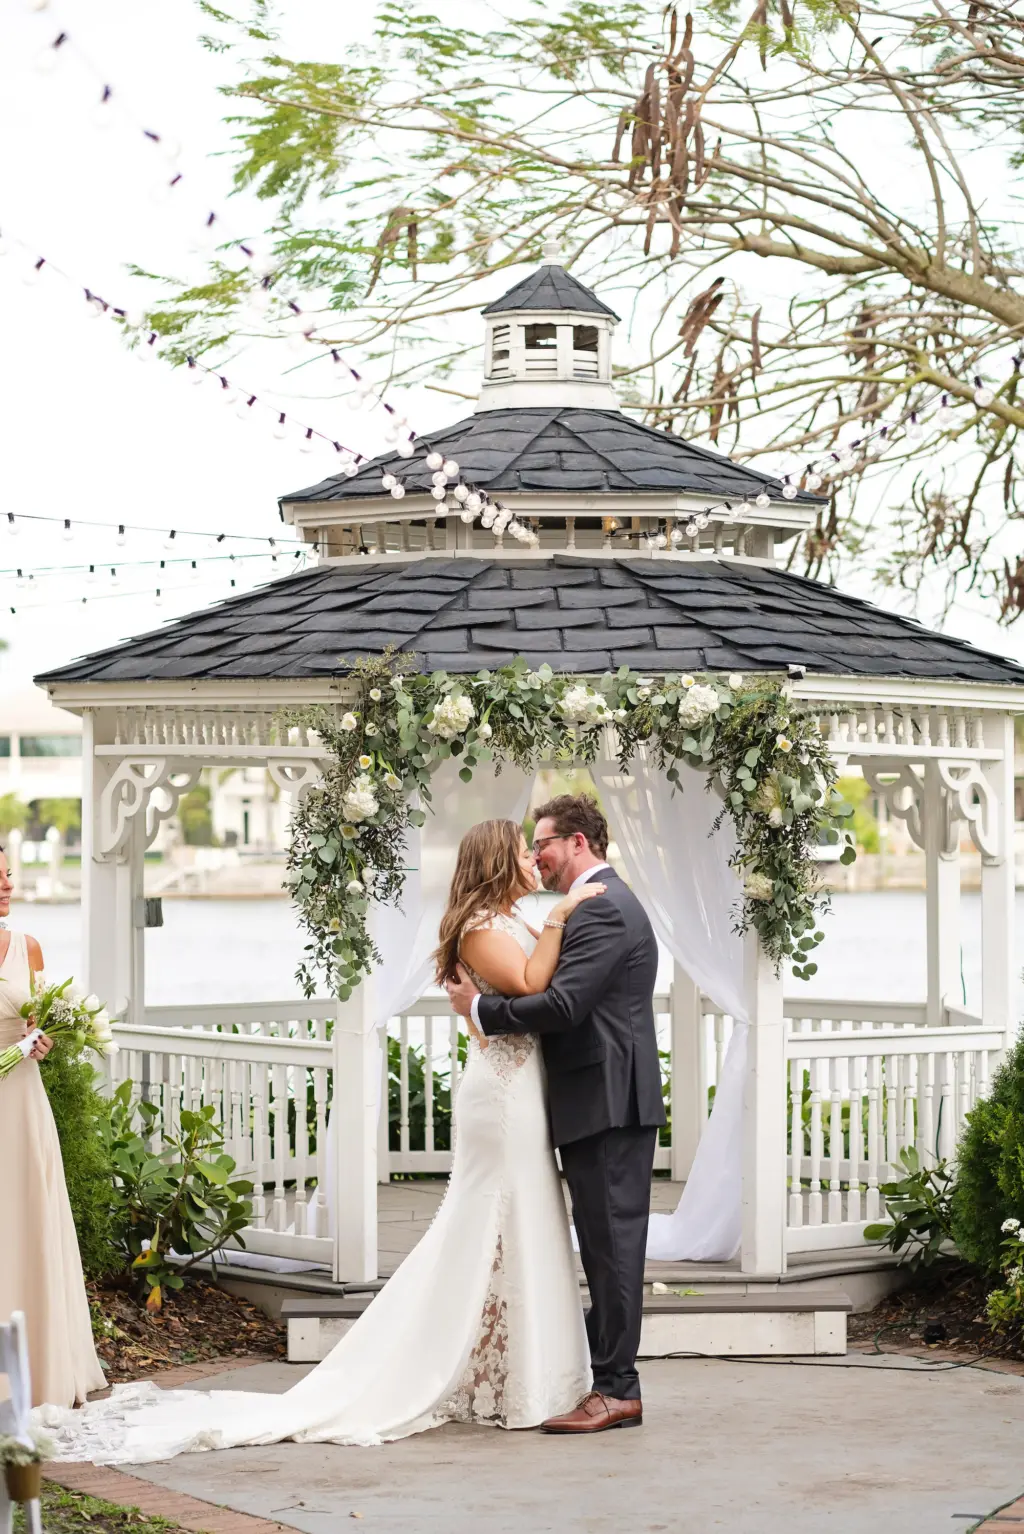 Bride and Groom First Kiss Wedding Portrait | Gazebo Wedding Ceremony Ideas | Tampa Wedding Planner The Olive Tree Weddings | Venue Davis Island Garden Club